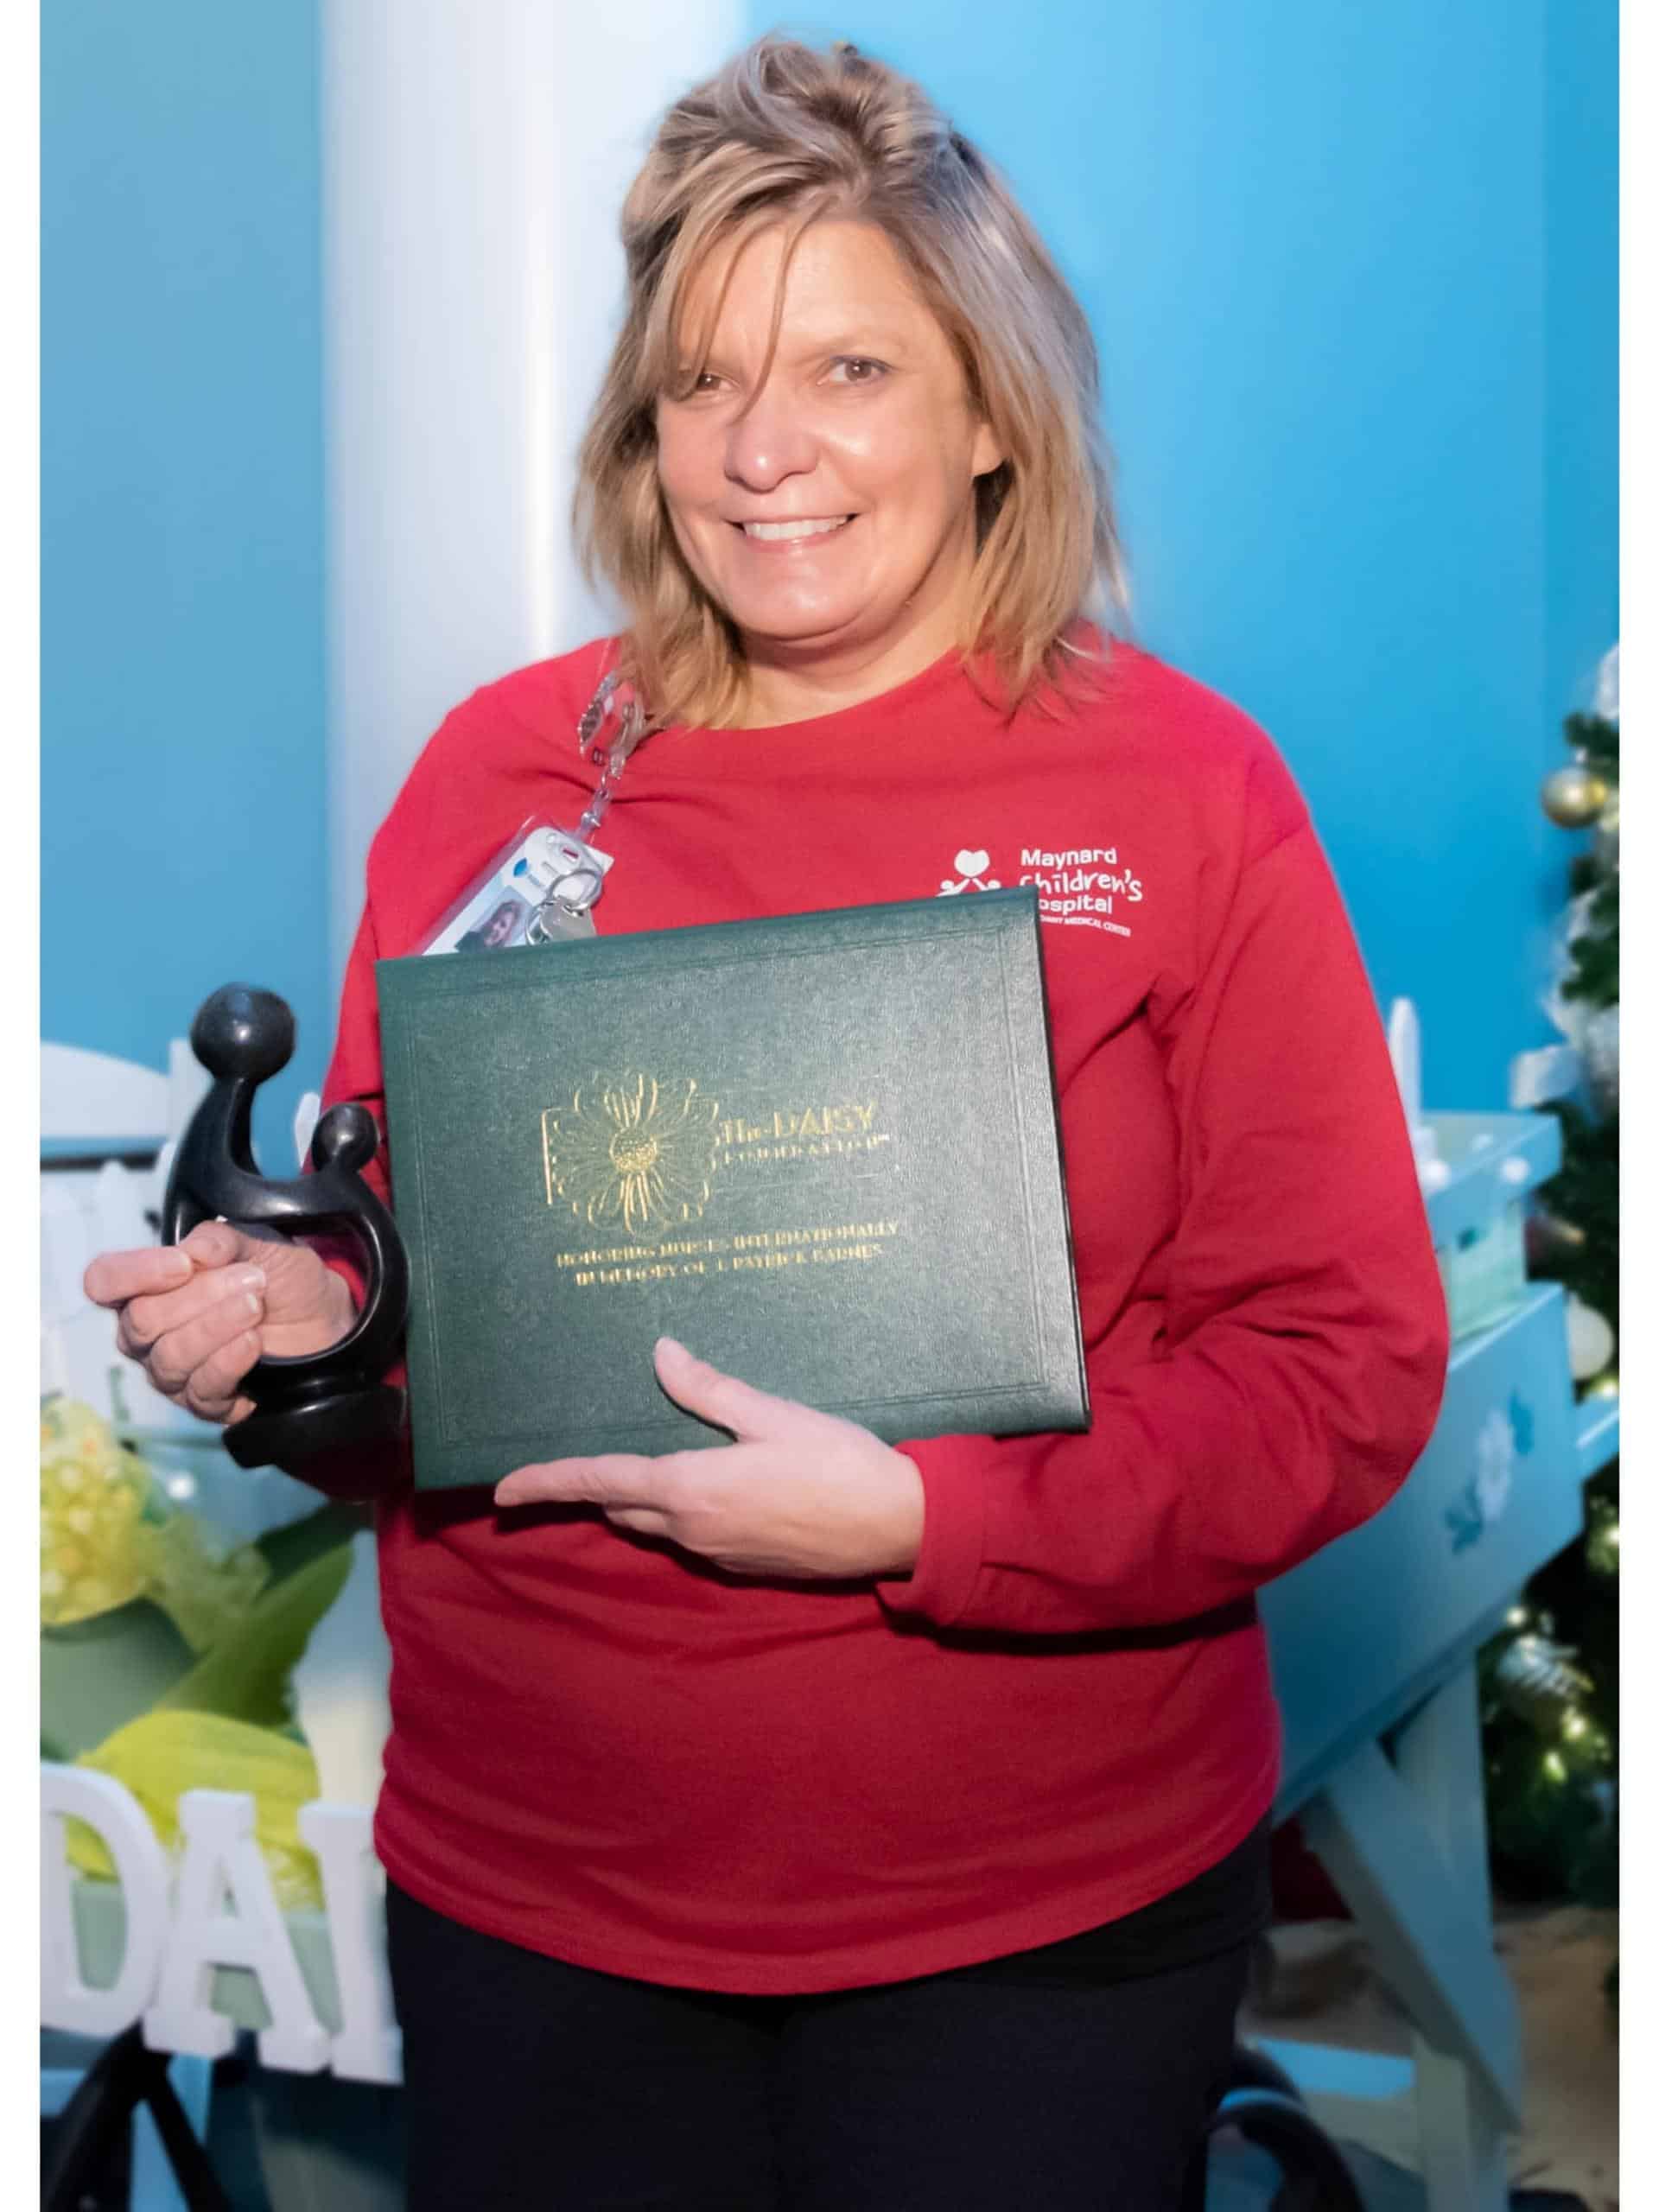 Deb Pomeroy receives a daisy award